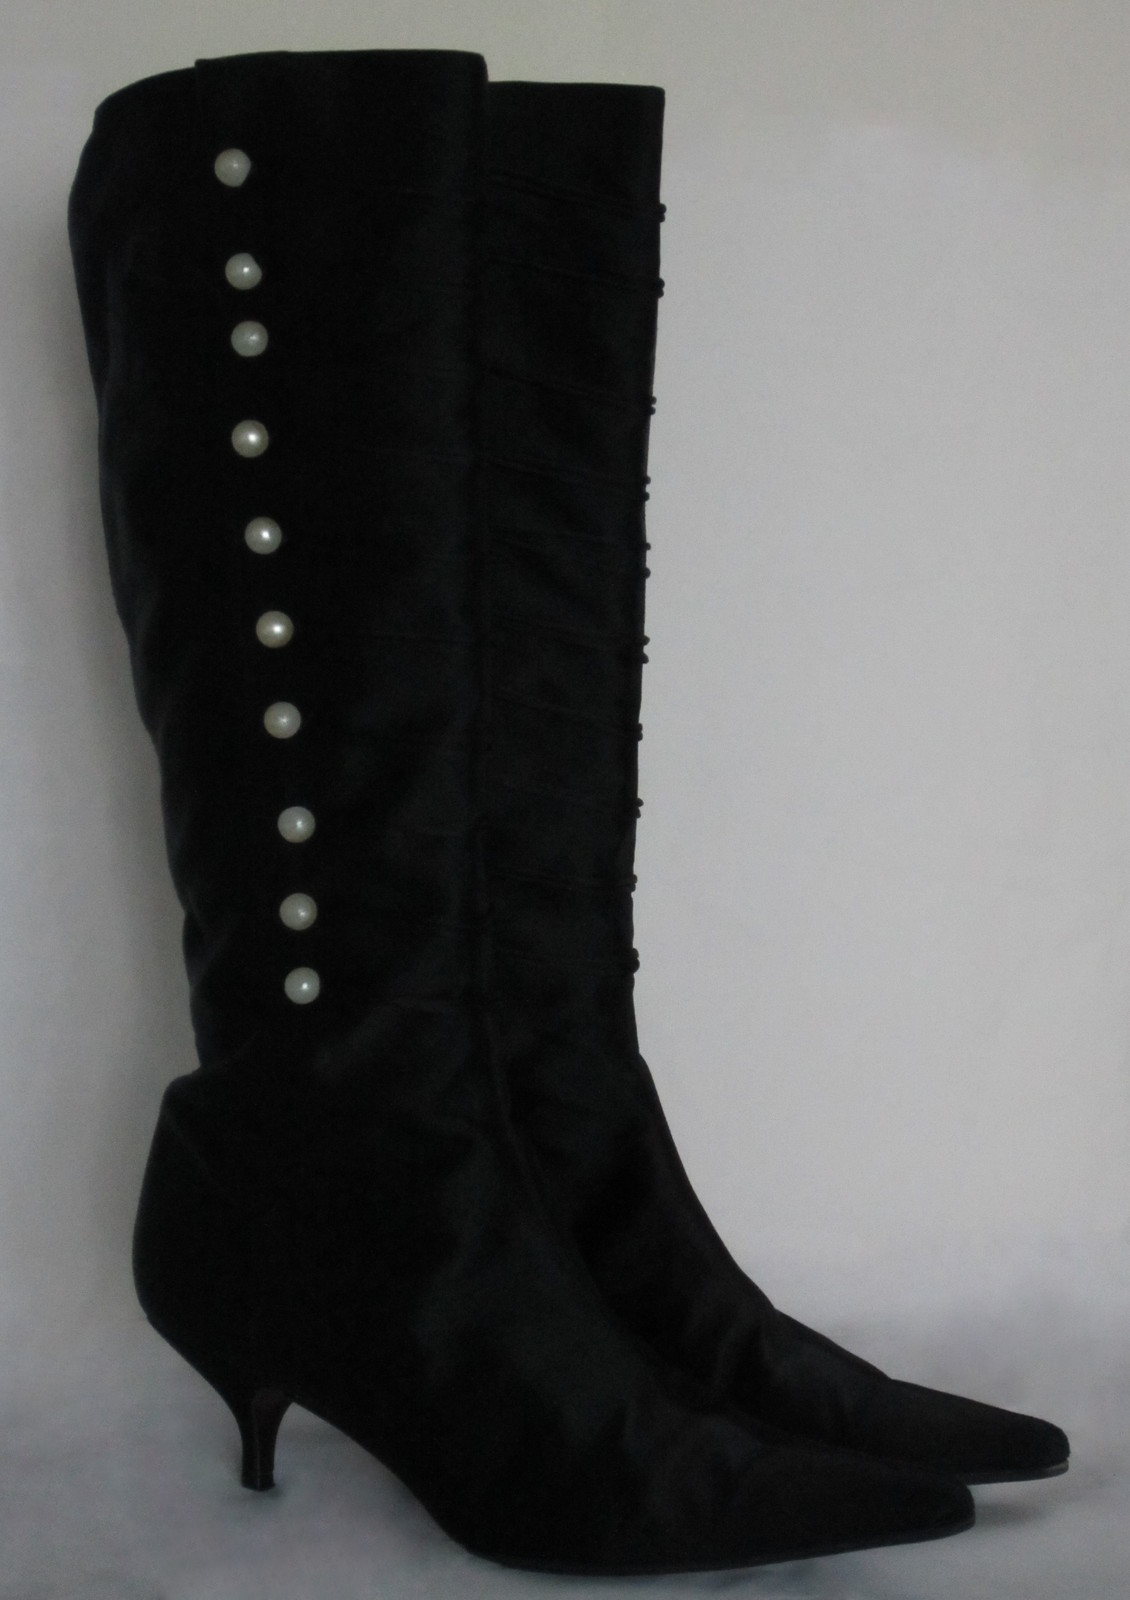 $1400+ AUTH Oscar de la Renta black dressy knee-high boots 41.0 *GORGEOUS* - $174.95